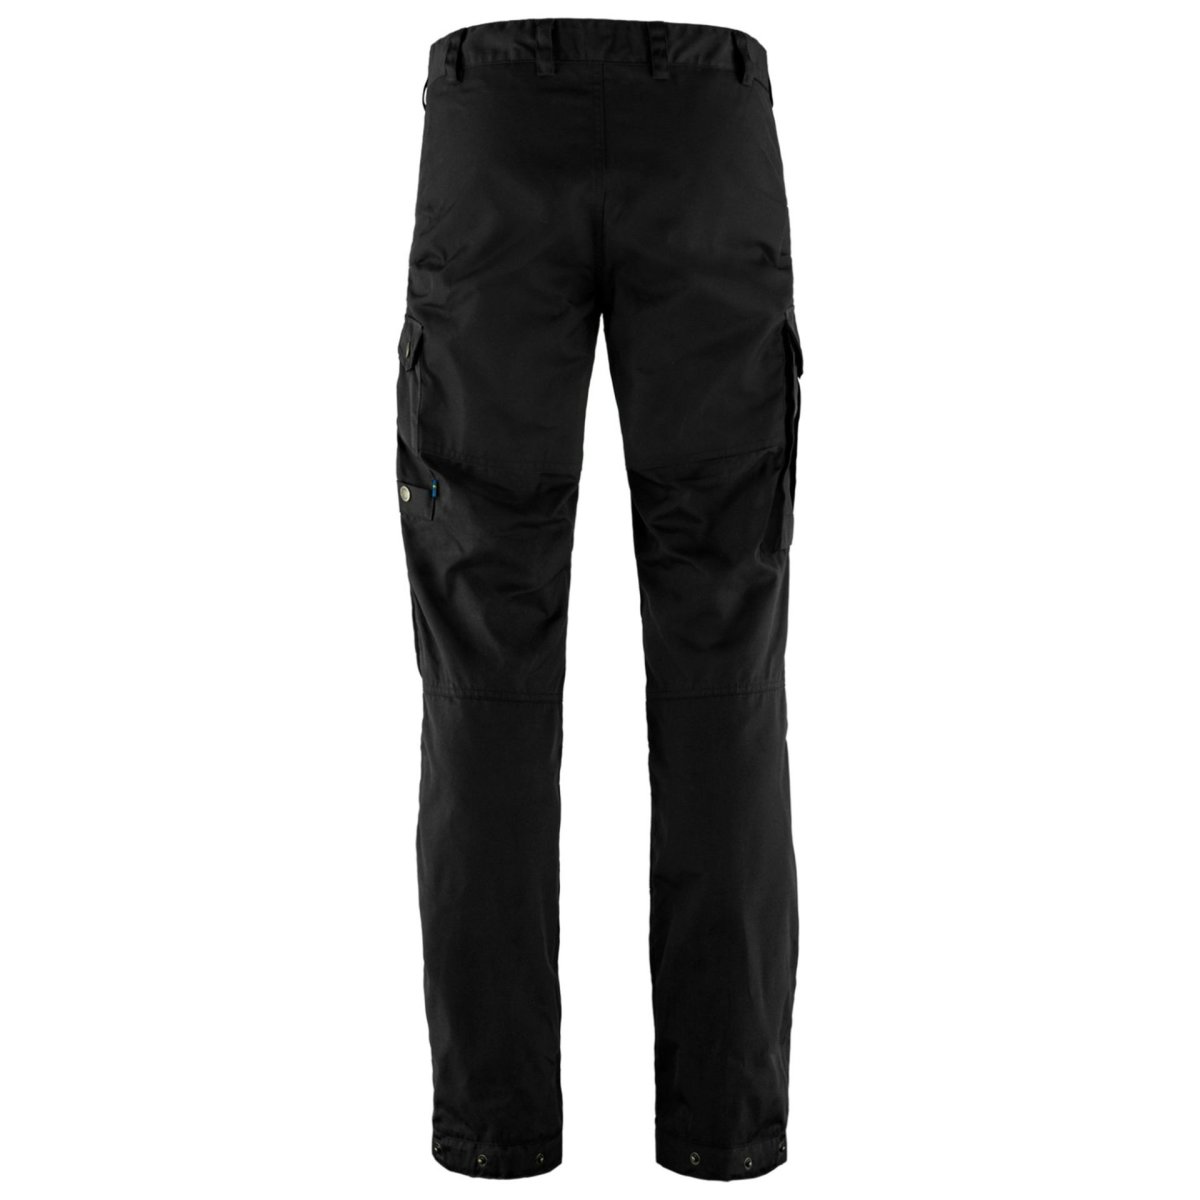 Fj&auml;llr&auml;ven Vidda Pro Trousers 87177 black G-1000&reg;  Trekkinghose Outdoorhose